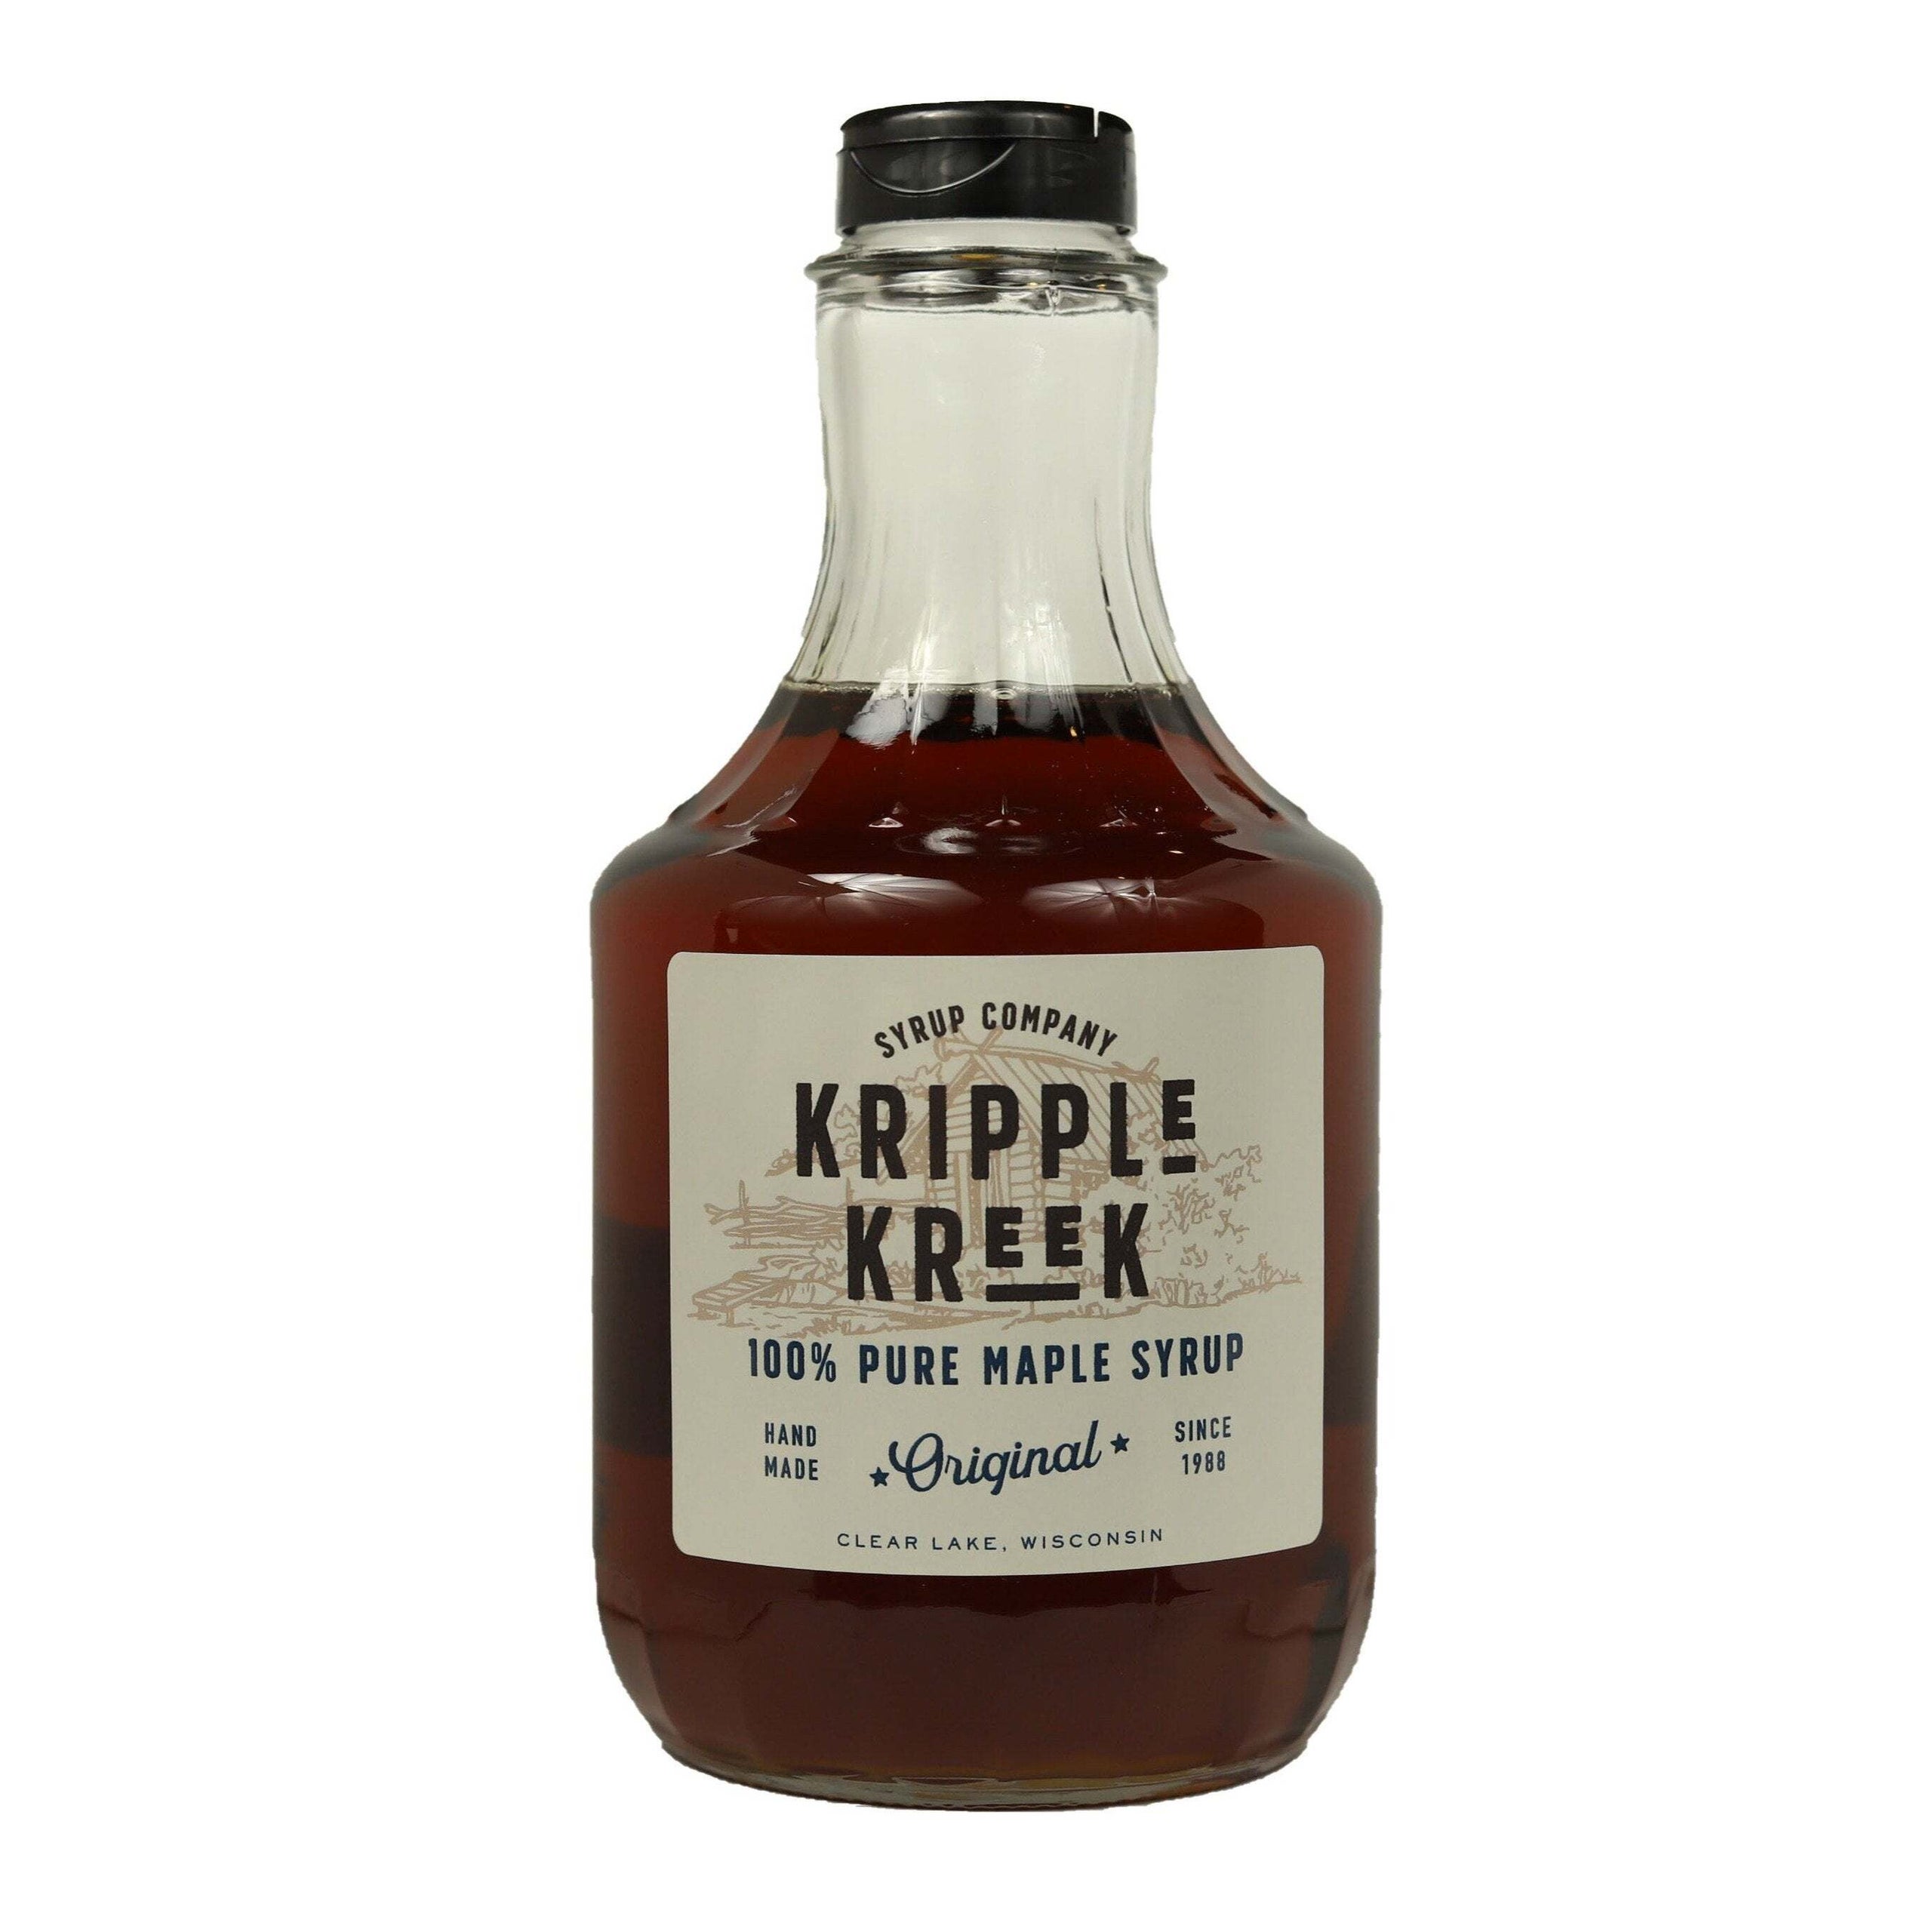 Kripple Kreek Syrup Company